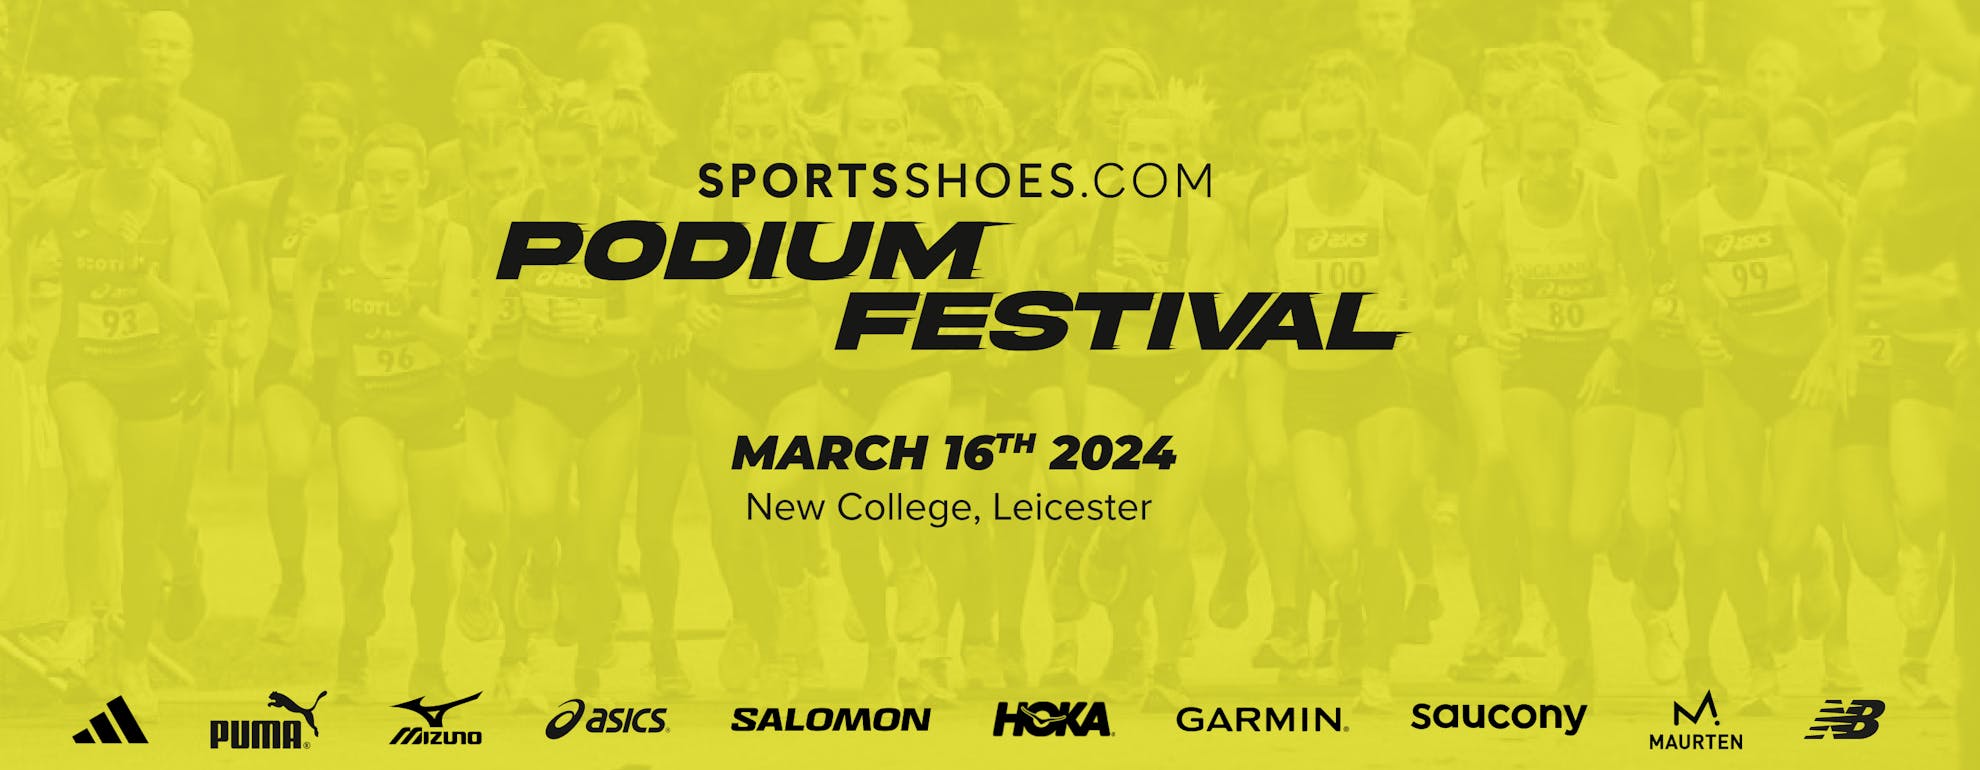 The SportsShoes Podium Festival 2024